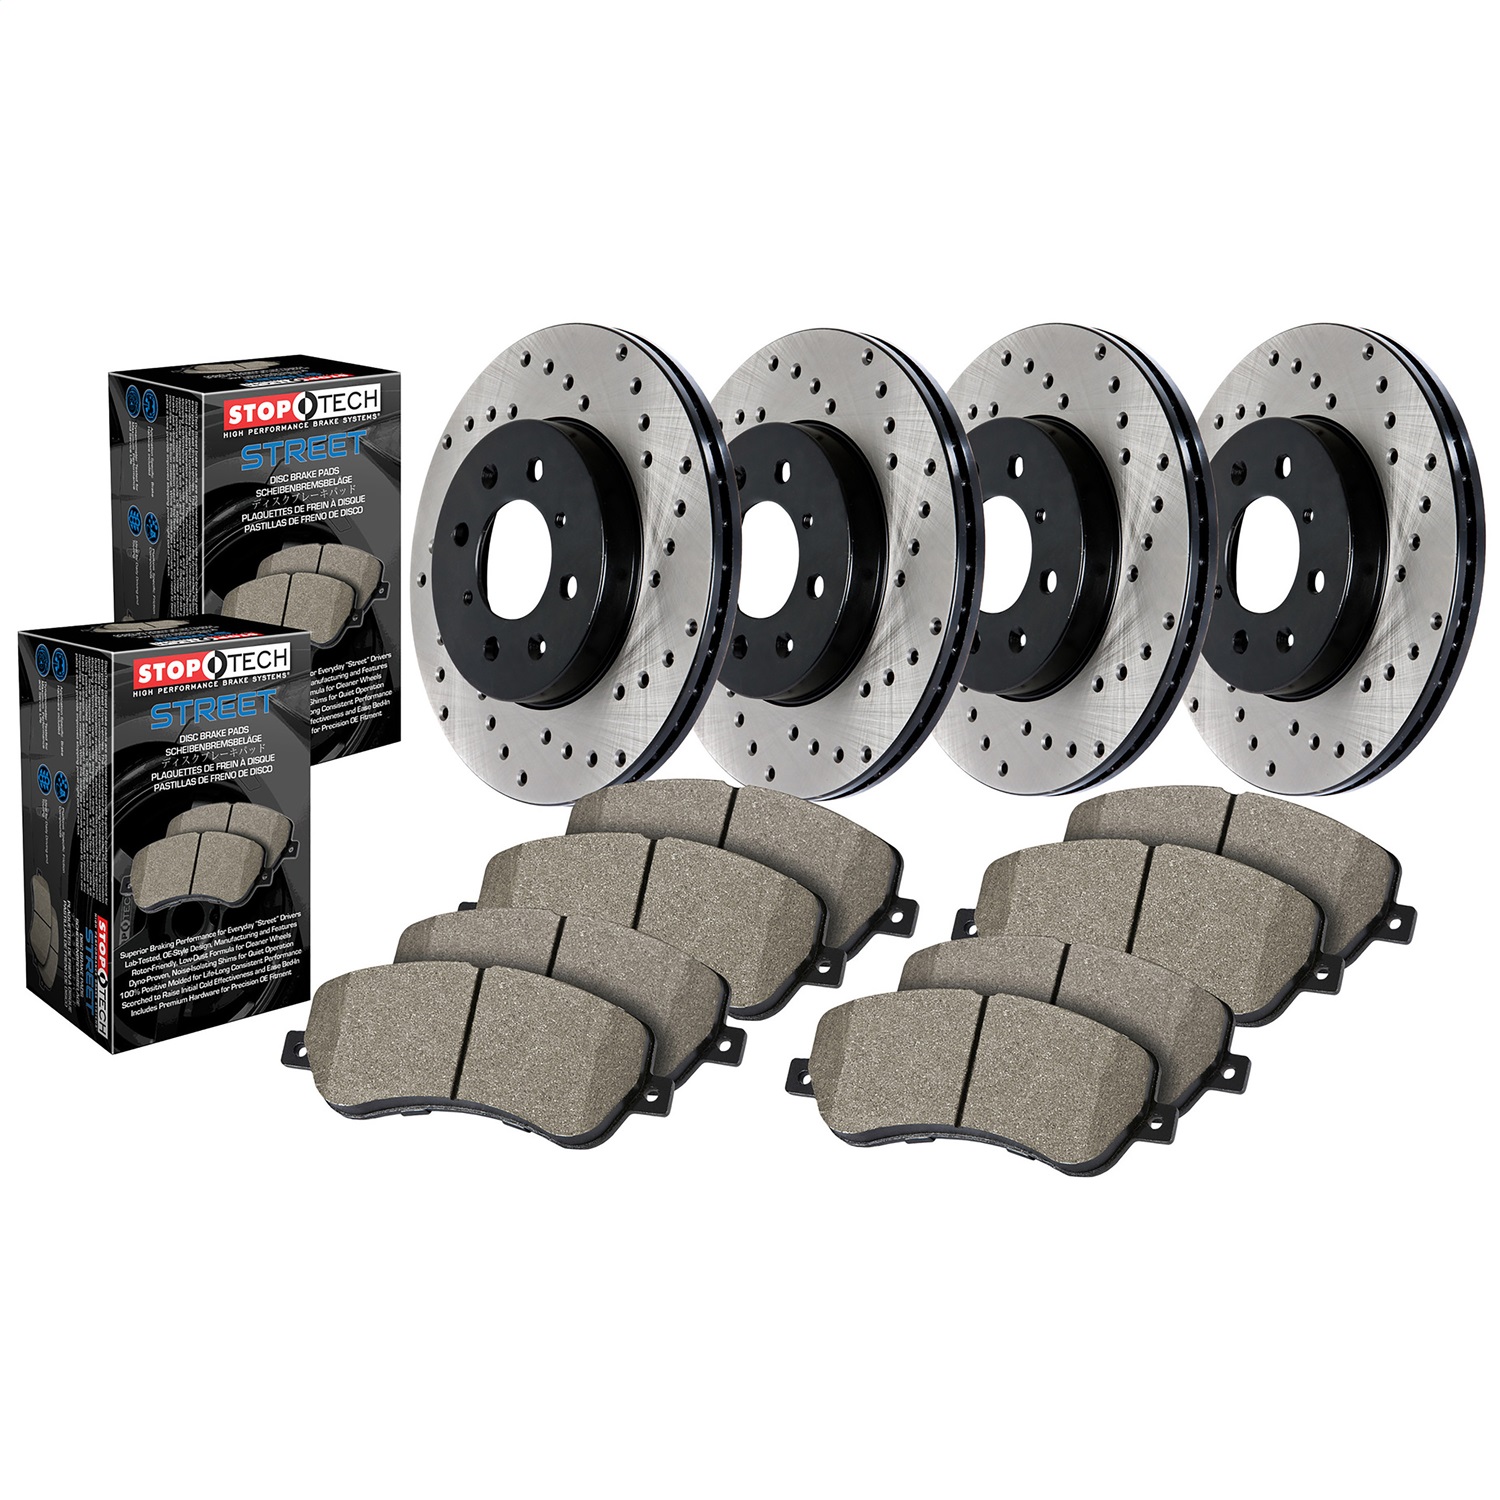 StopTech 936.40028 Street - 4 Wheel Disc Brake Kit w/Cross-Drilled Rotor